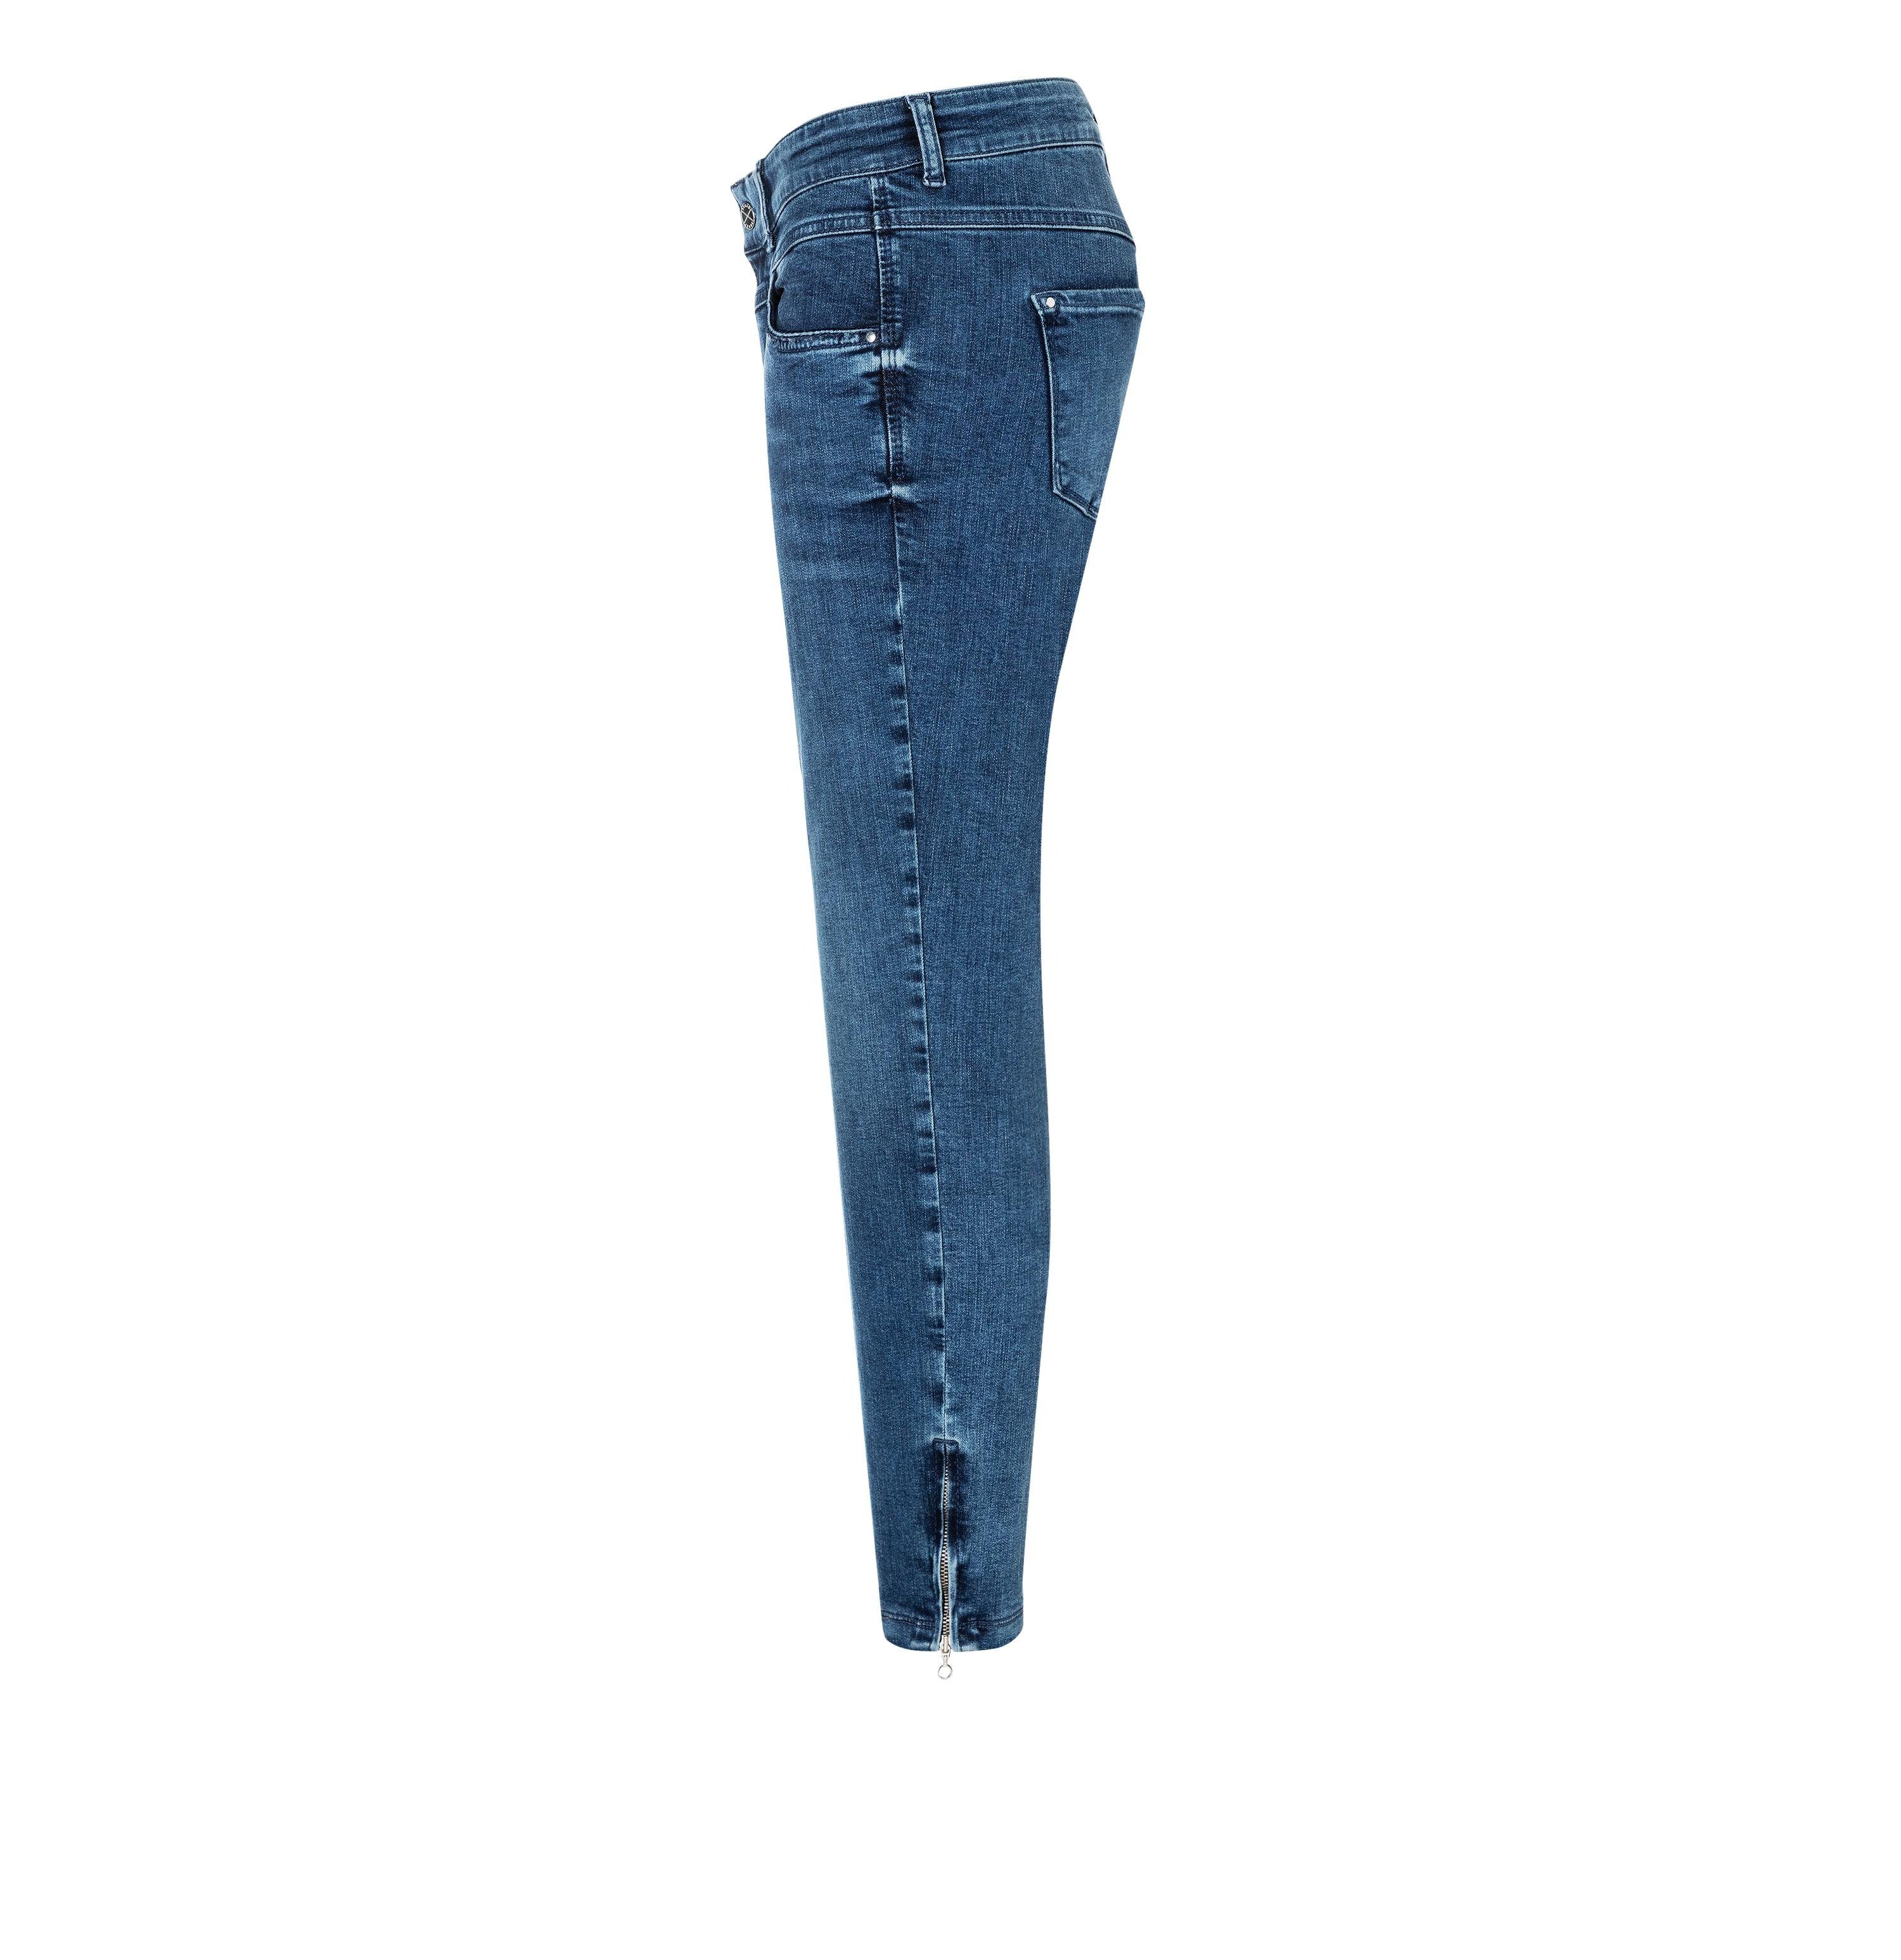 Stretch-Jeans MAC MAC DREAM D530 authe 5452-90-0356 commercial mid blau blue CHIC